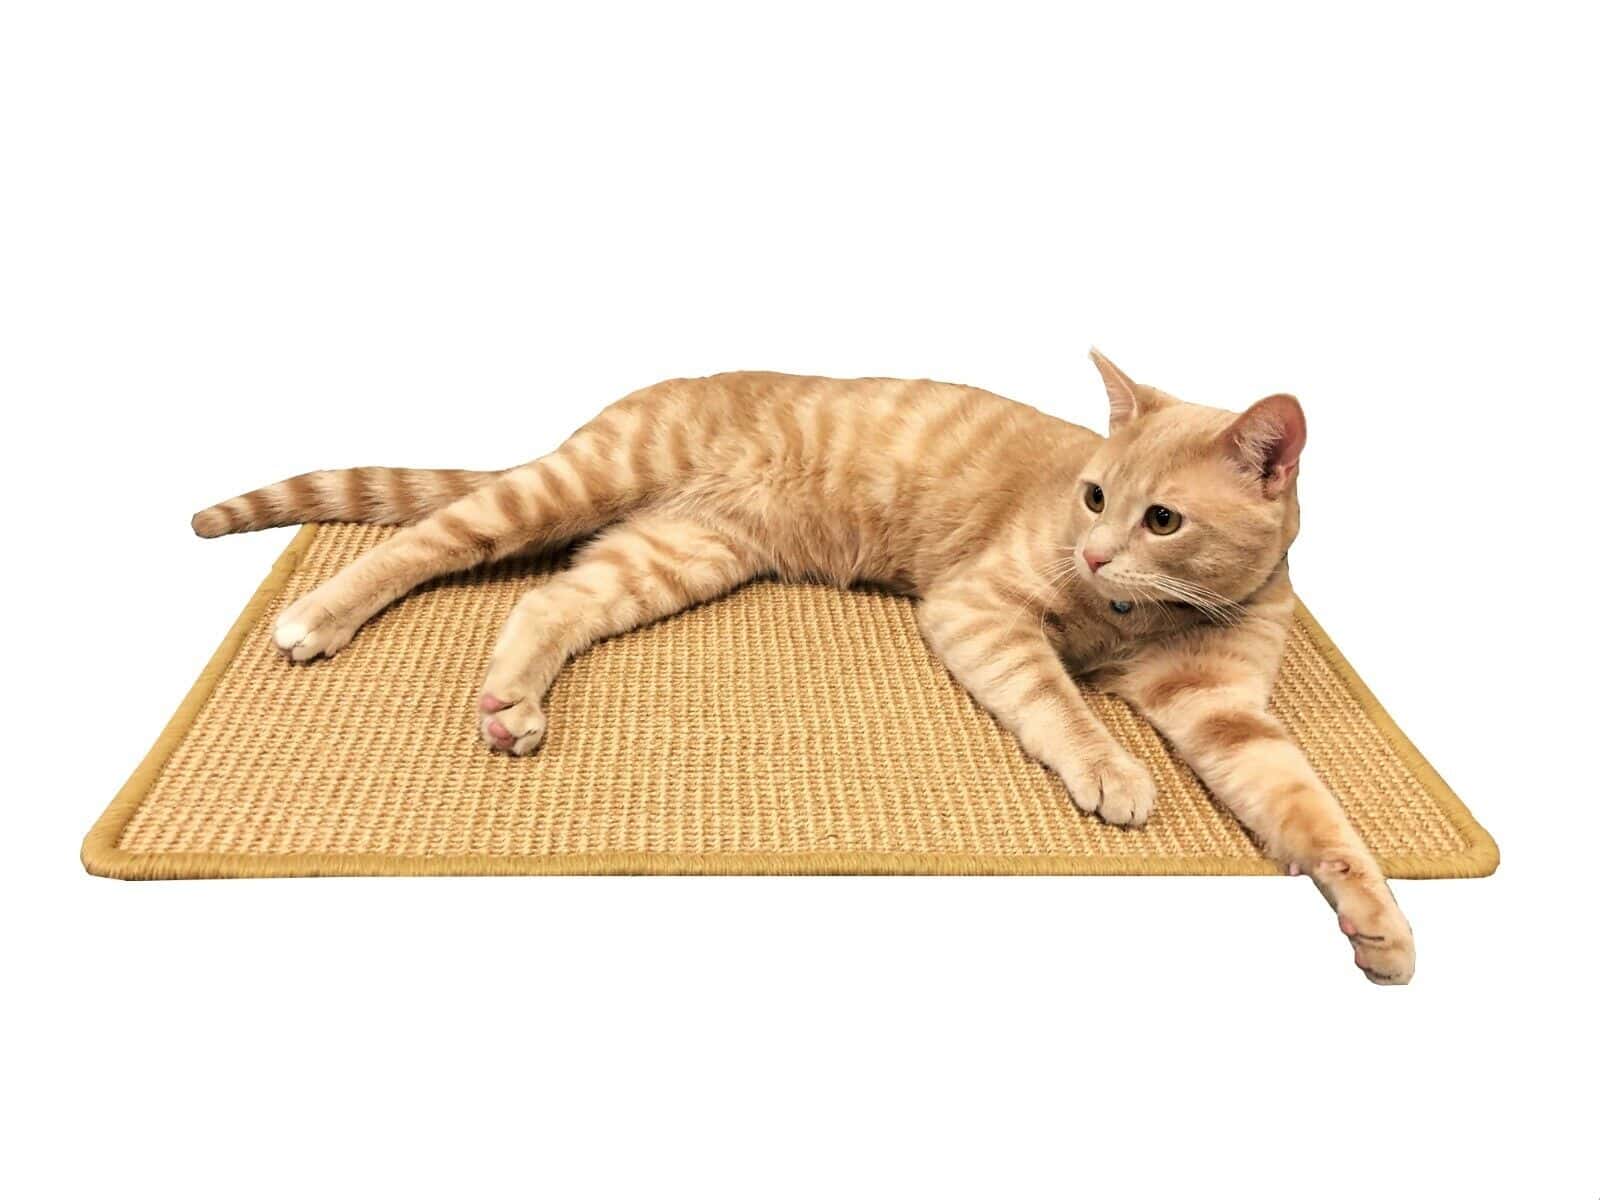 A cat lying on a mat.